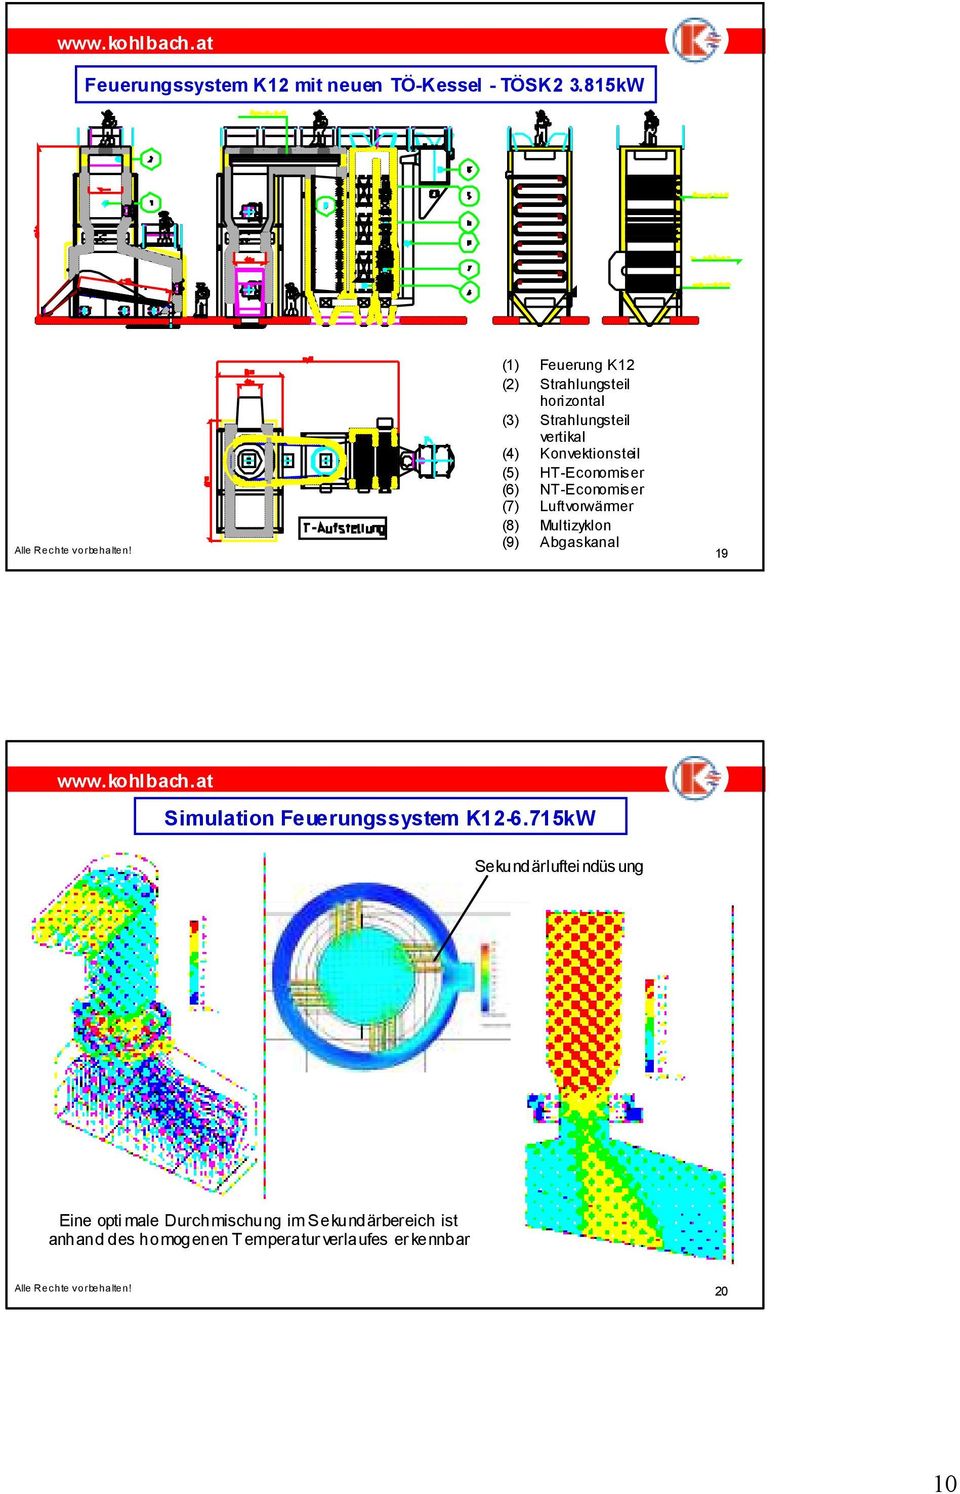 (5) HT-Economiser (6) NT-Economiser (7) Luftvorwärmer (8) Multizyklon (9) Abgaskanal 19 Simulation